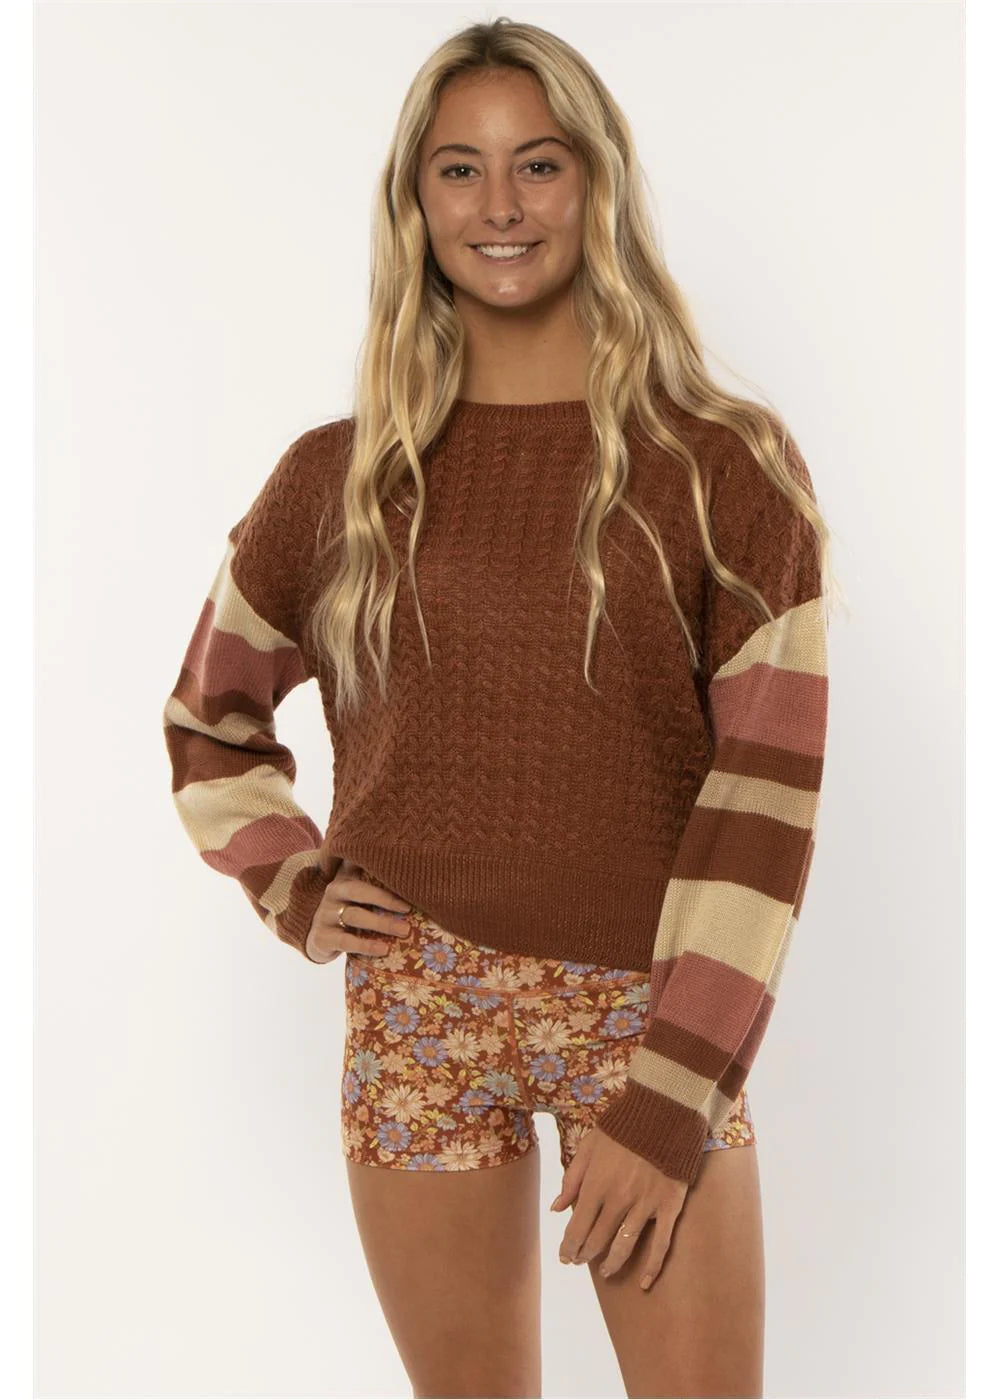 Pearl LS Sweater Top - SoHa Surf Shop